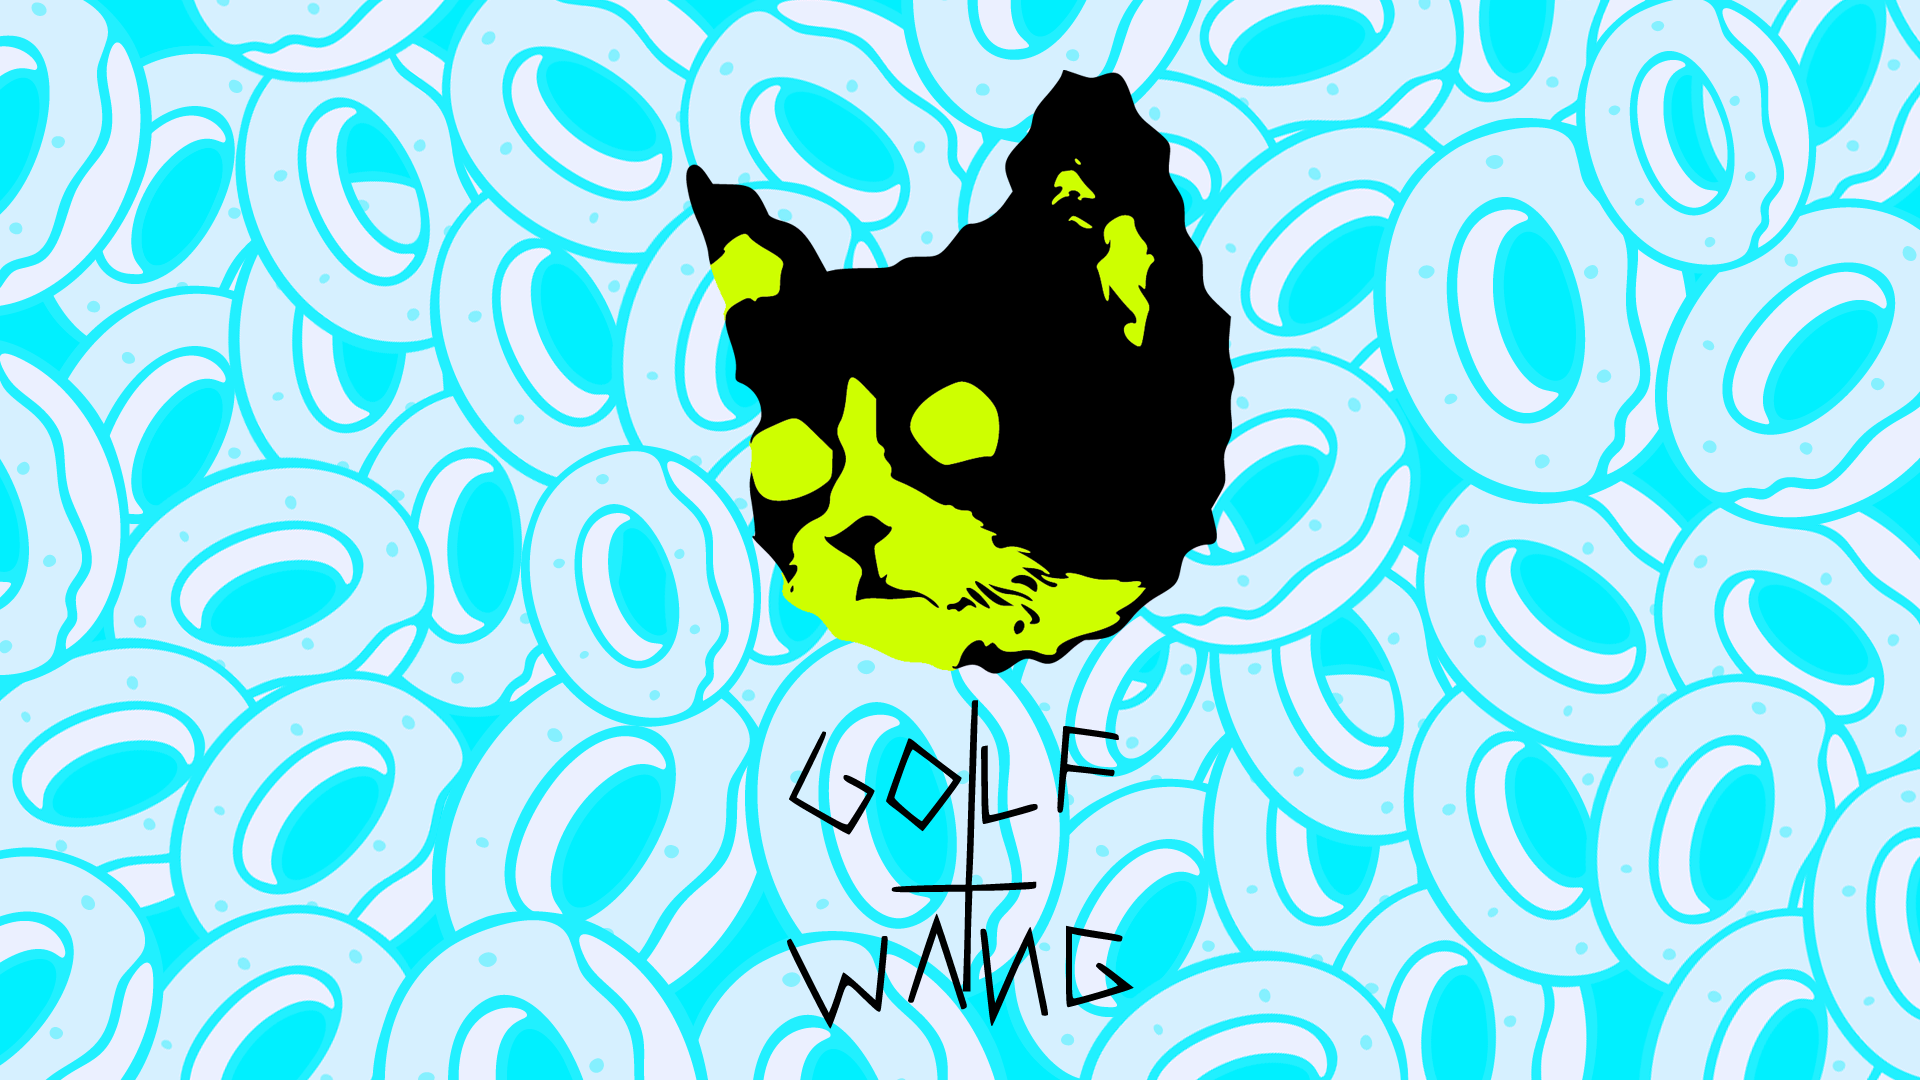 Golf wang Logos